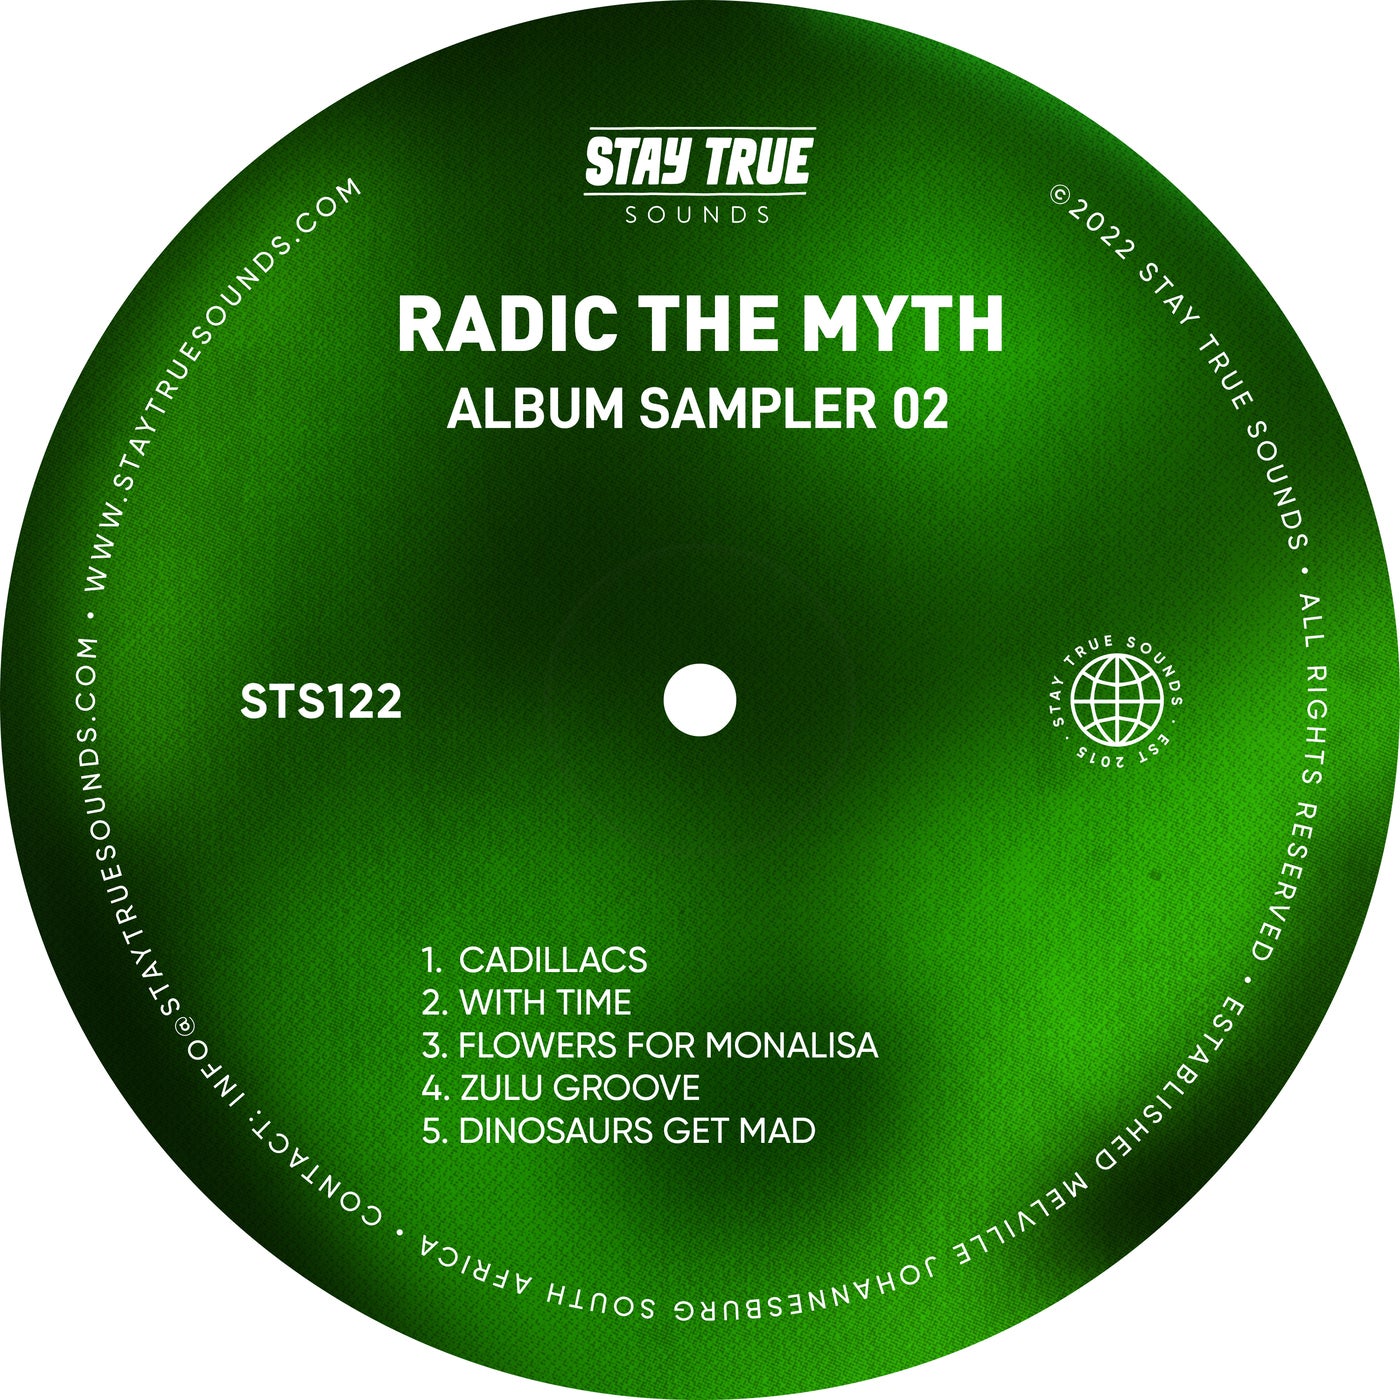 Radic The Myth - Album Sampler 02 [Stay True Sounds]